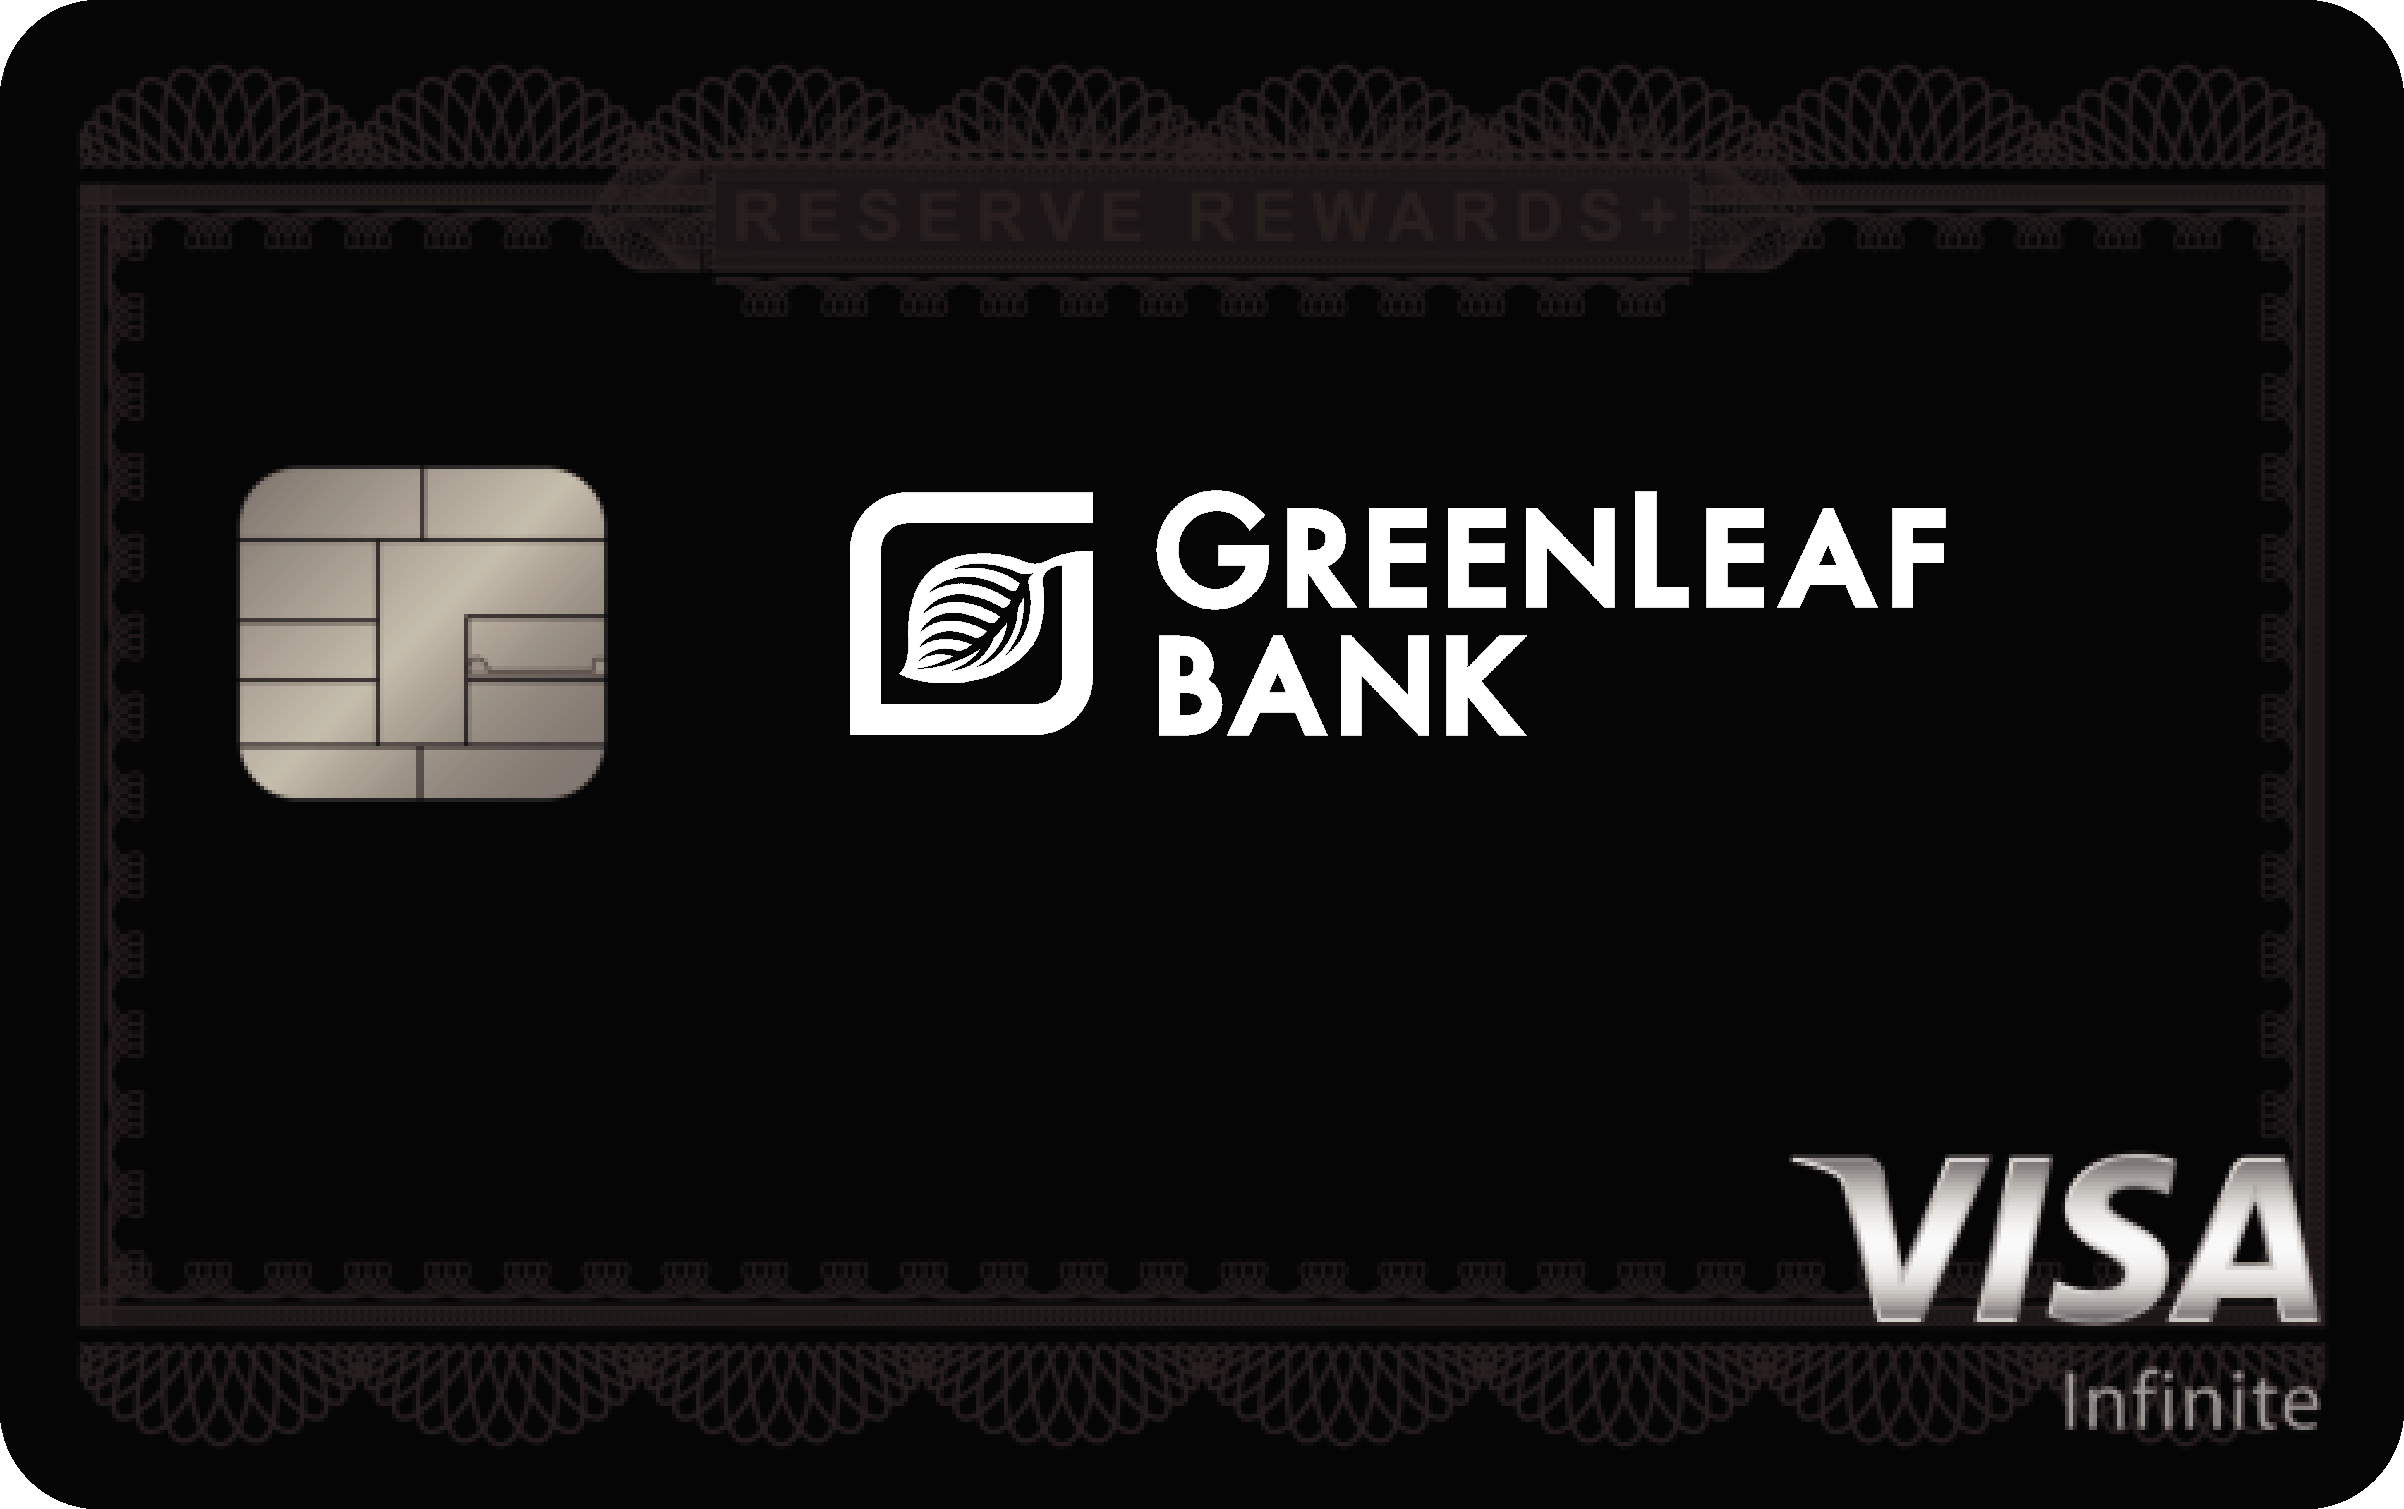 Greenleaf Bank